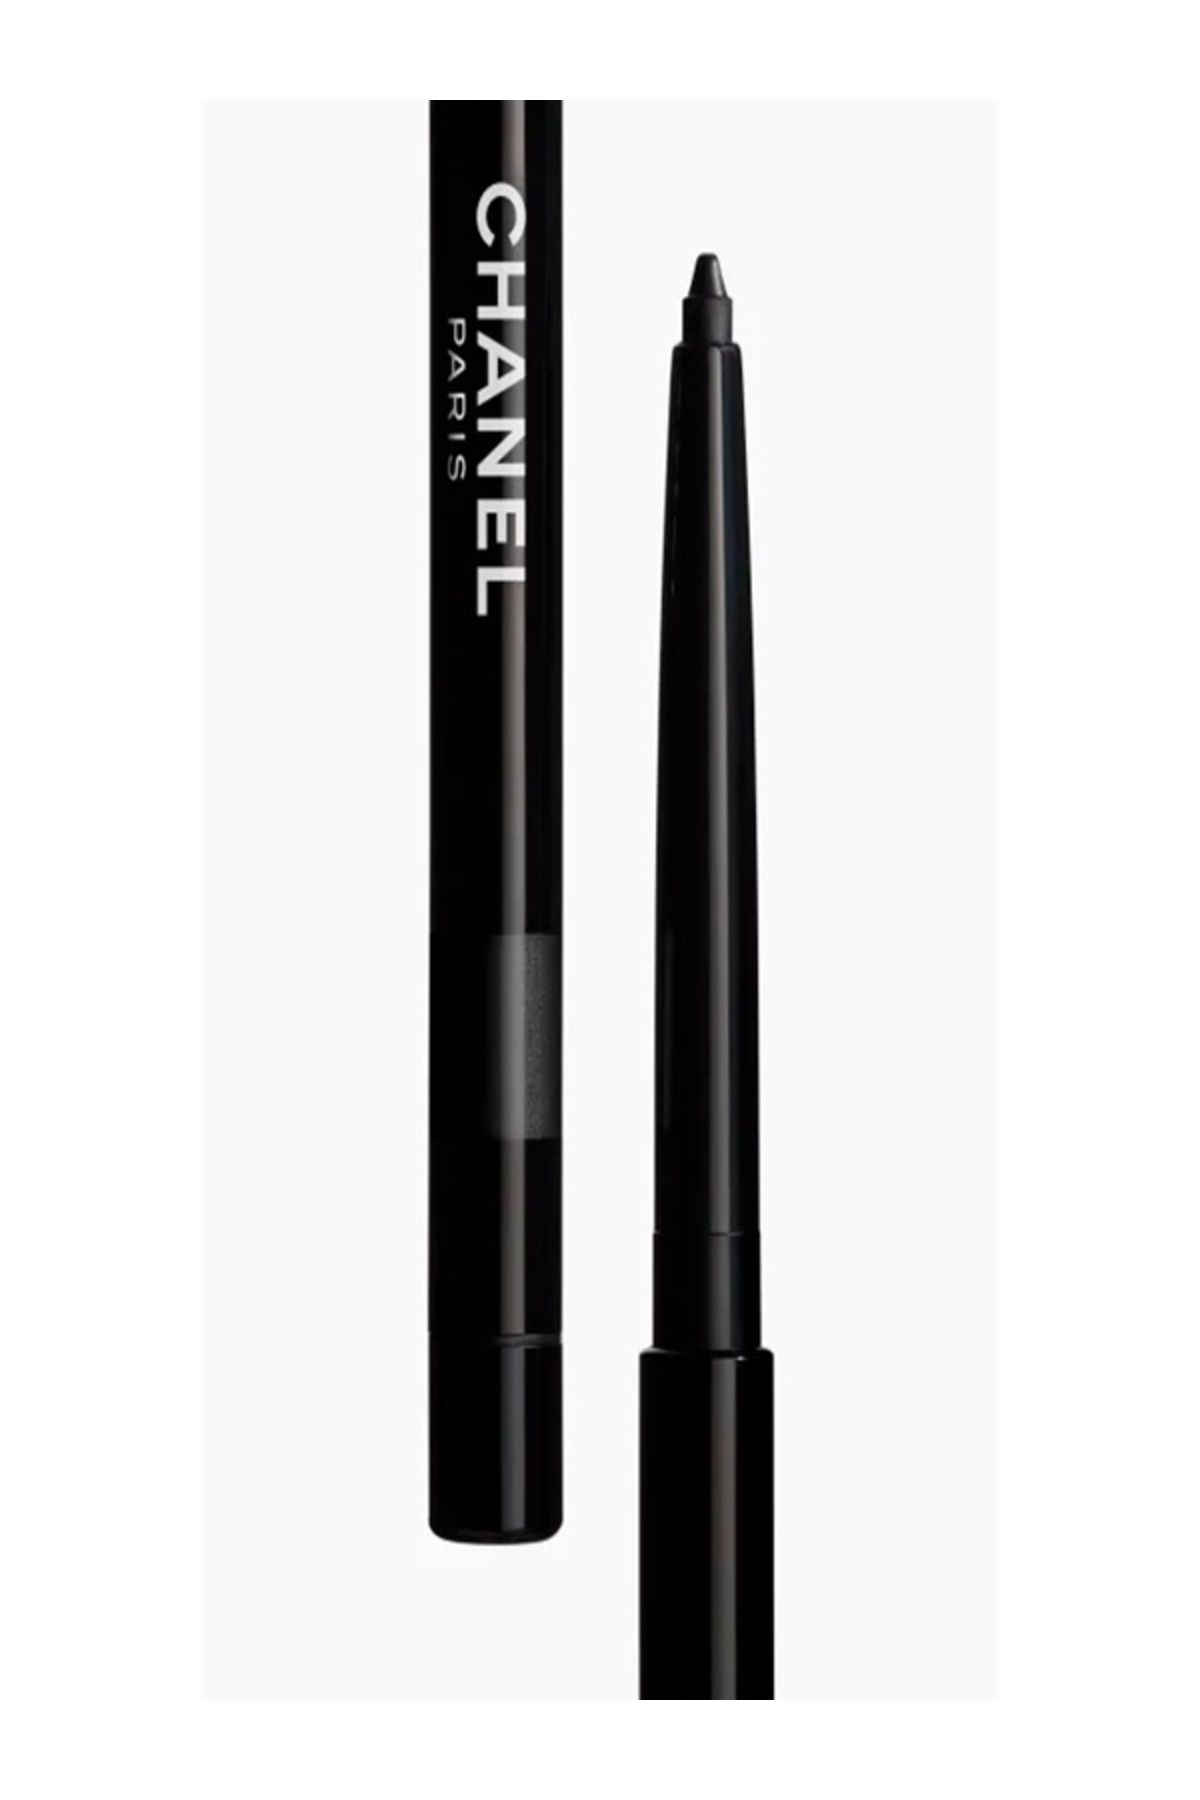 Chanel مداد چشم ضد آب STYLO YEUX برای چشم های حساس رنگ مشکی عمیق